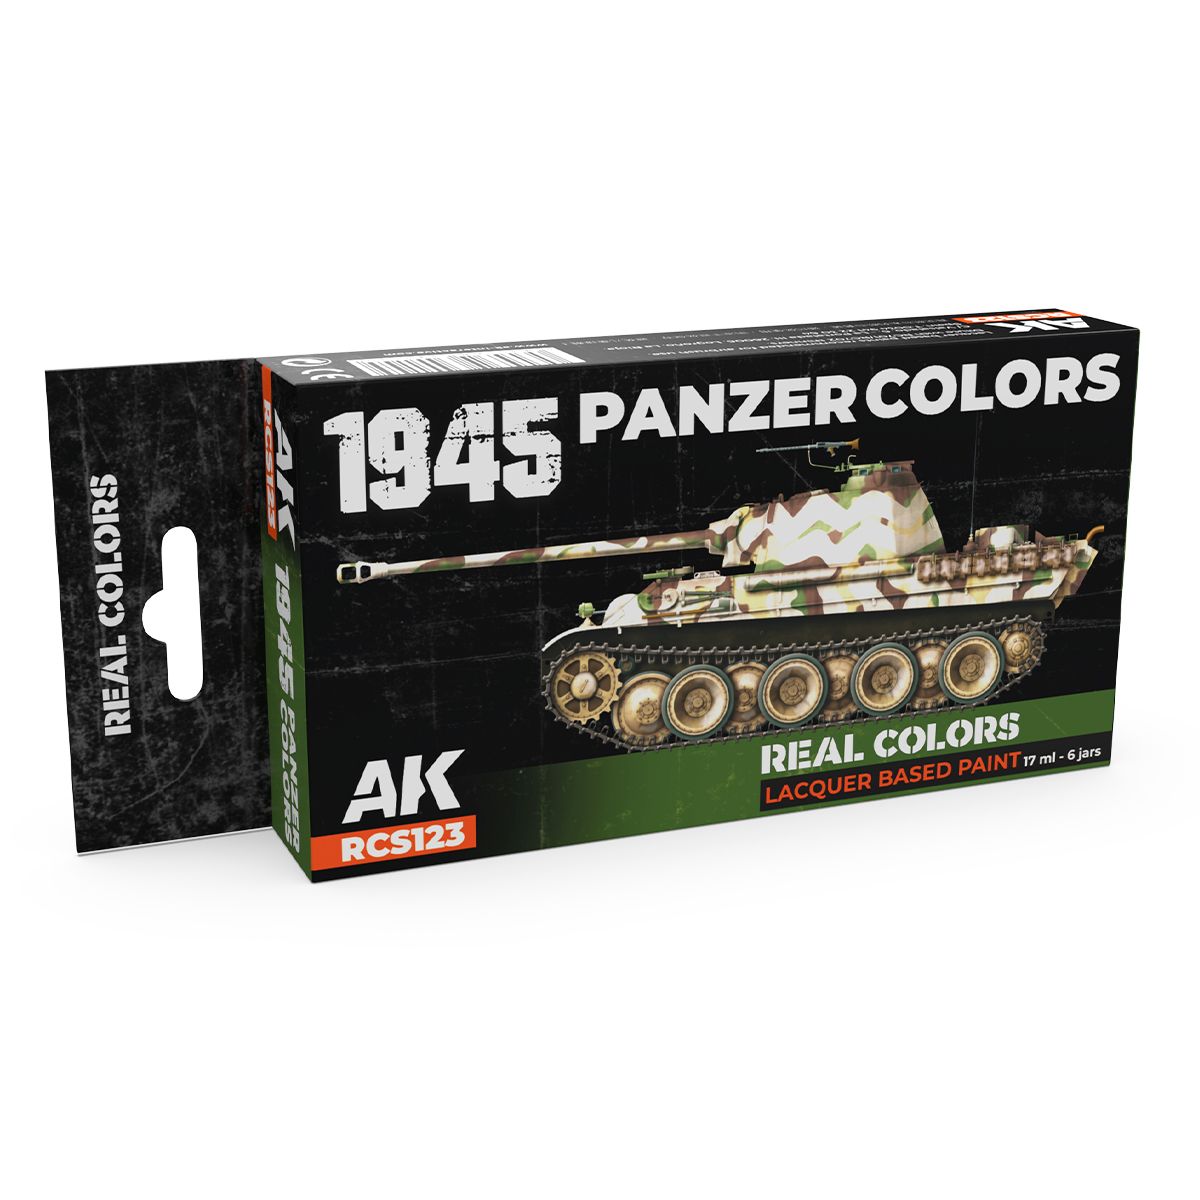 1945 Panzer Colors